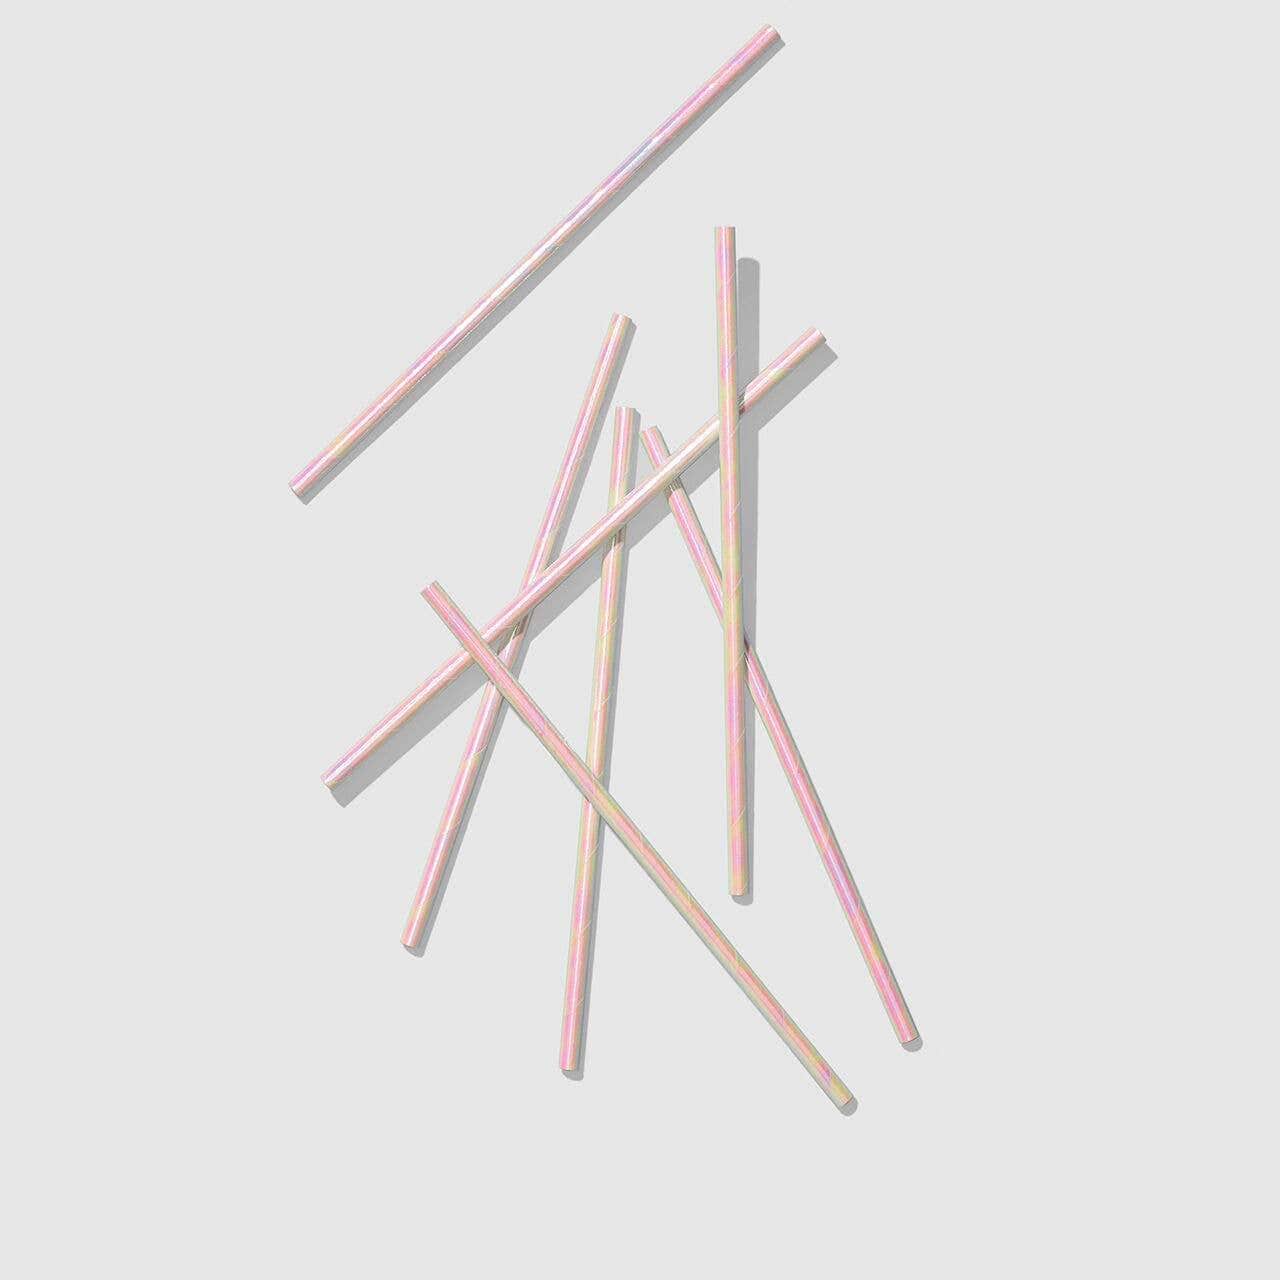 Pink paper straws